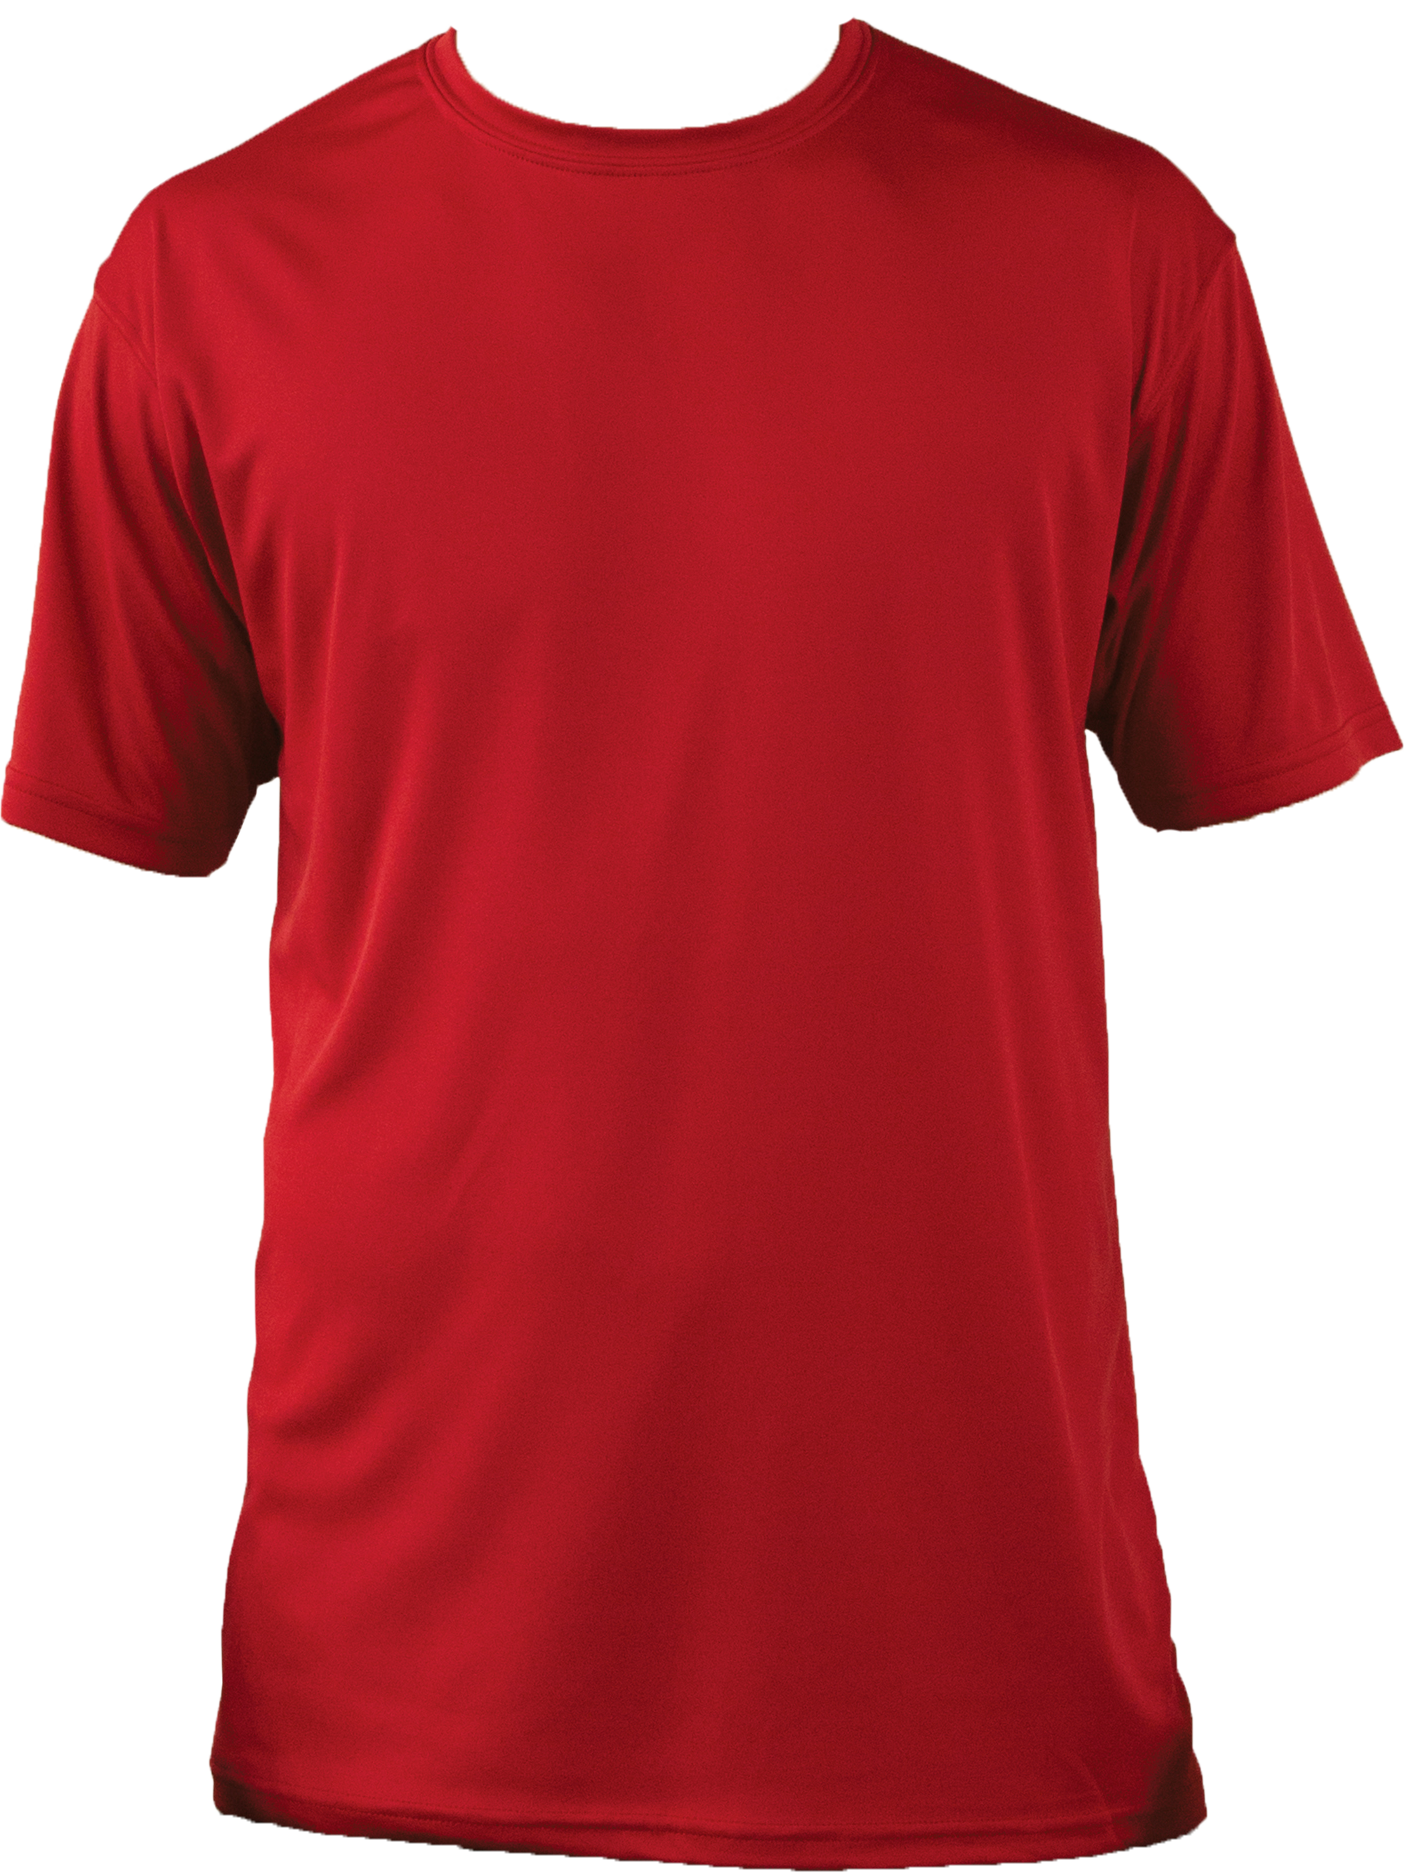 Performance Shirt, Unisex, Red, 2X